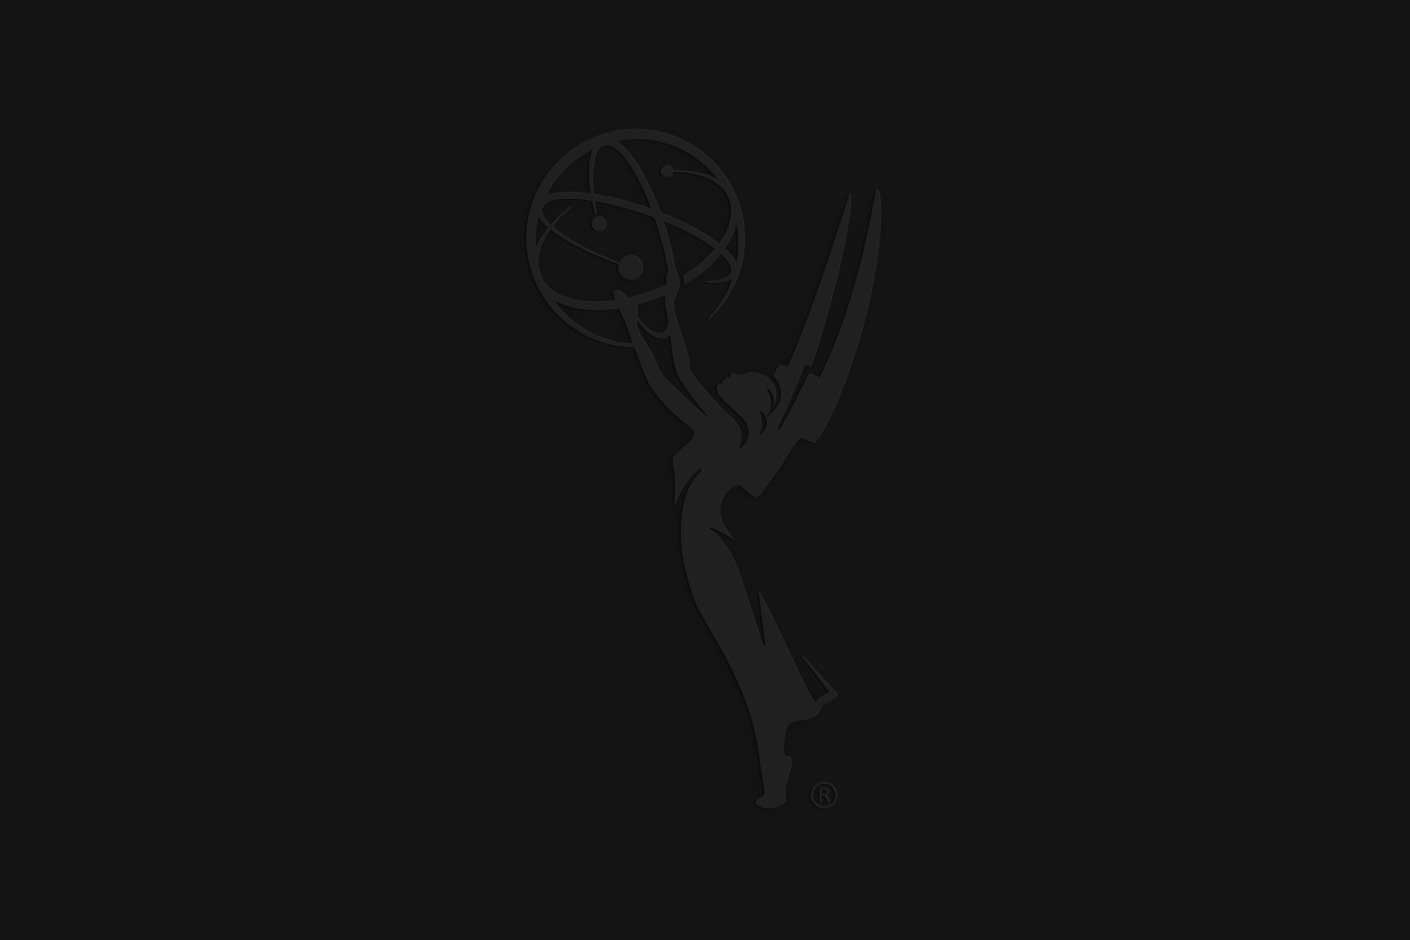 65th Emmy Awards Key Art